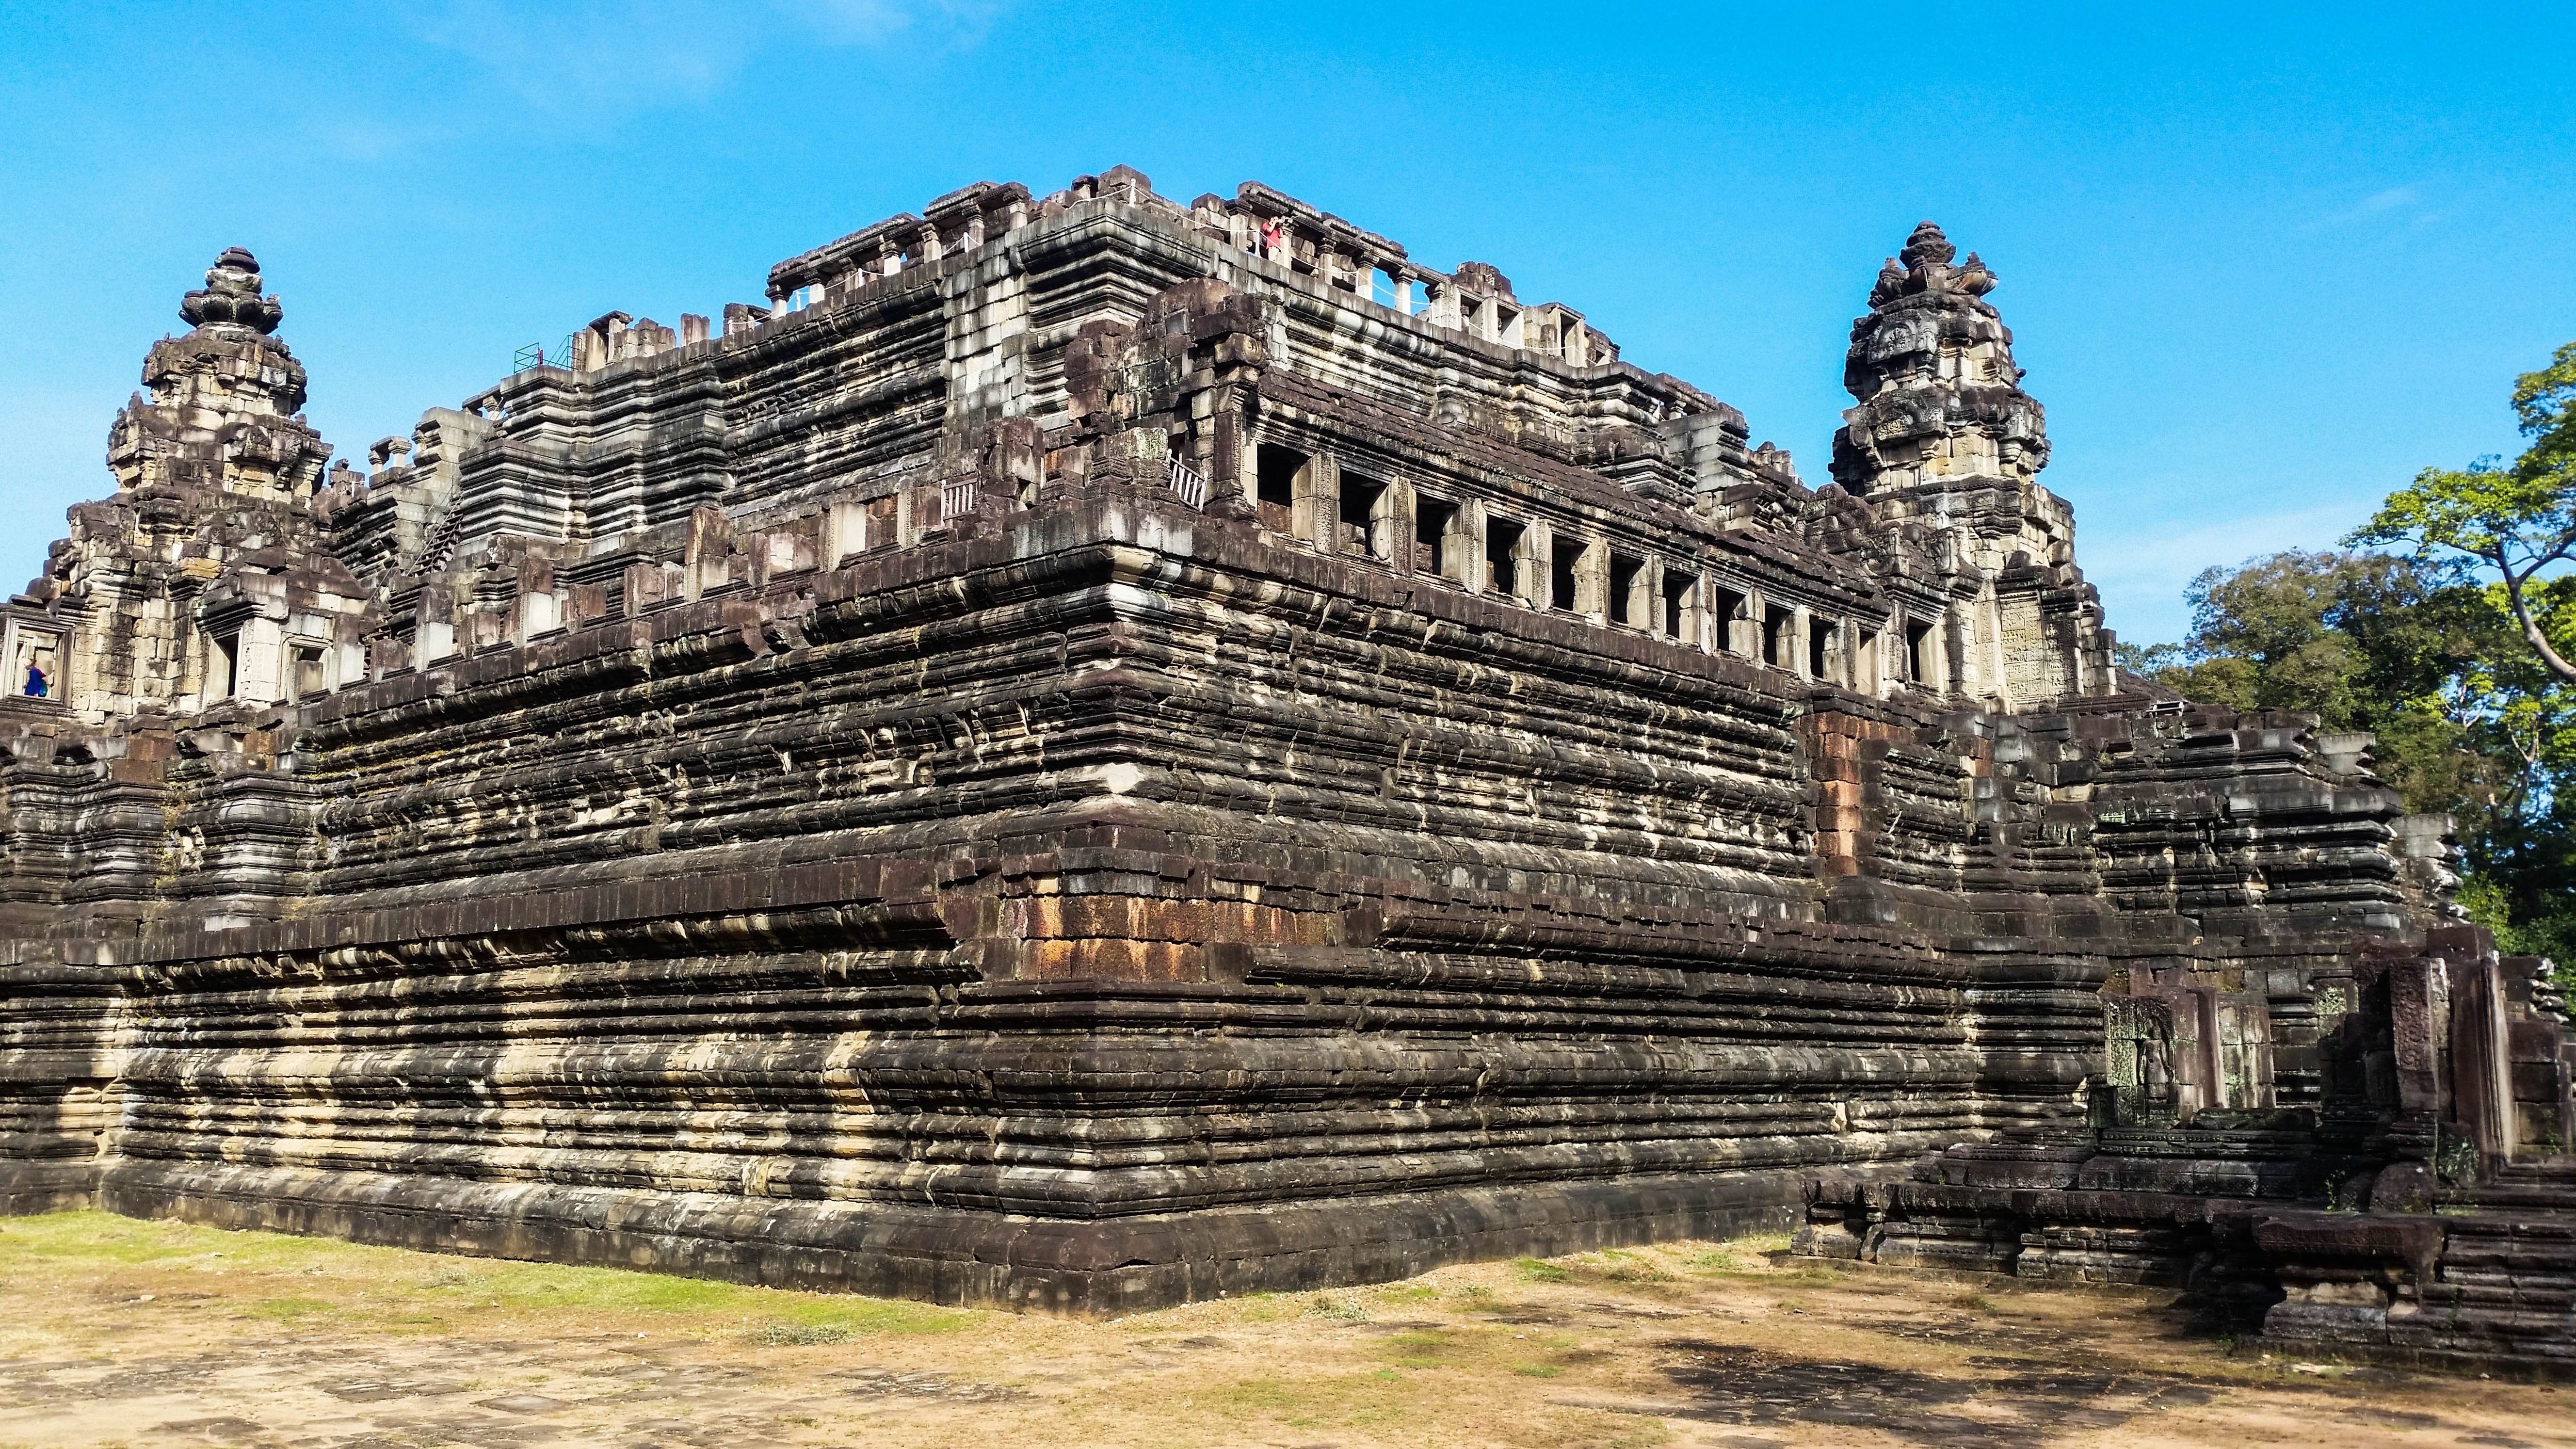 Asia, Angkor, History, Cambodia, Temple, sky, architecture